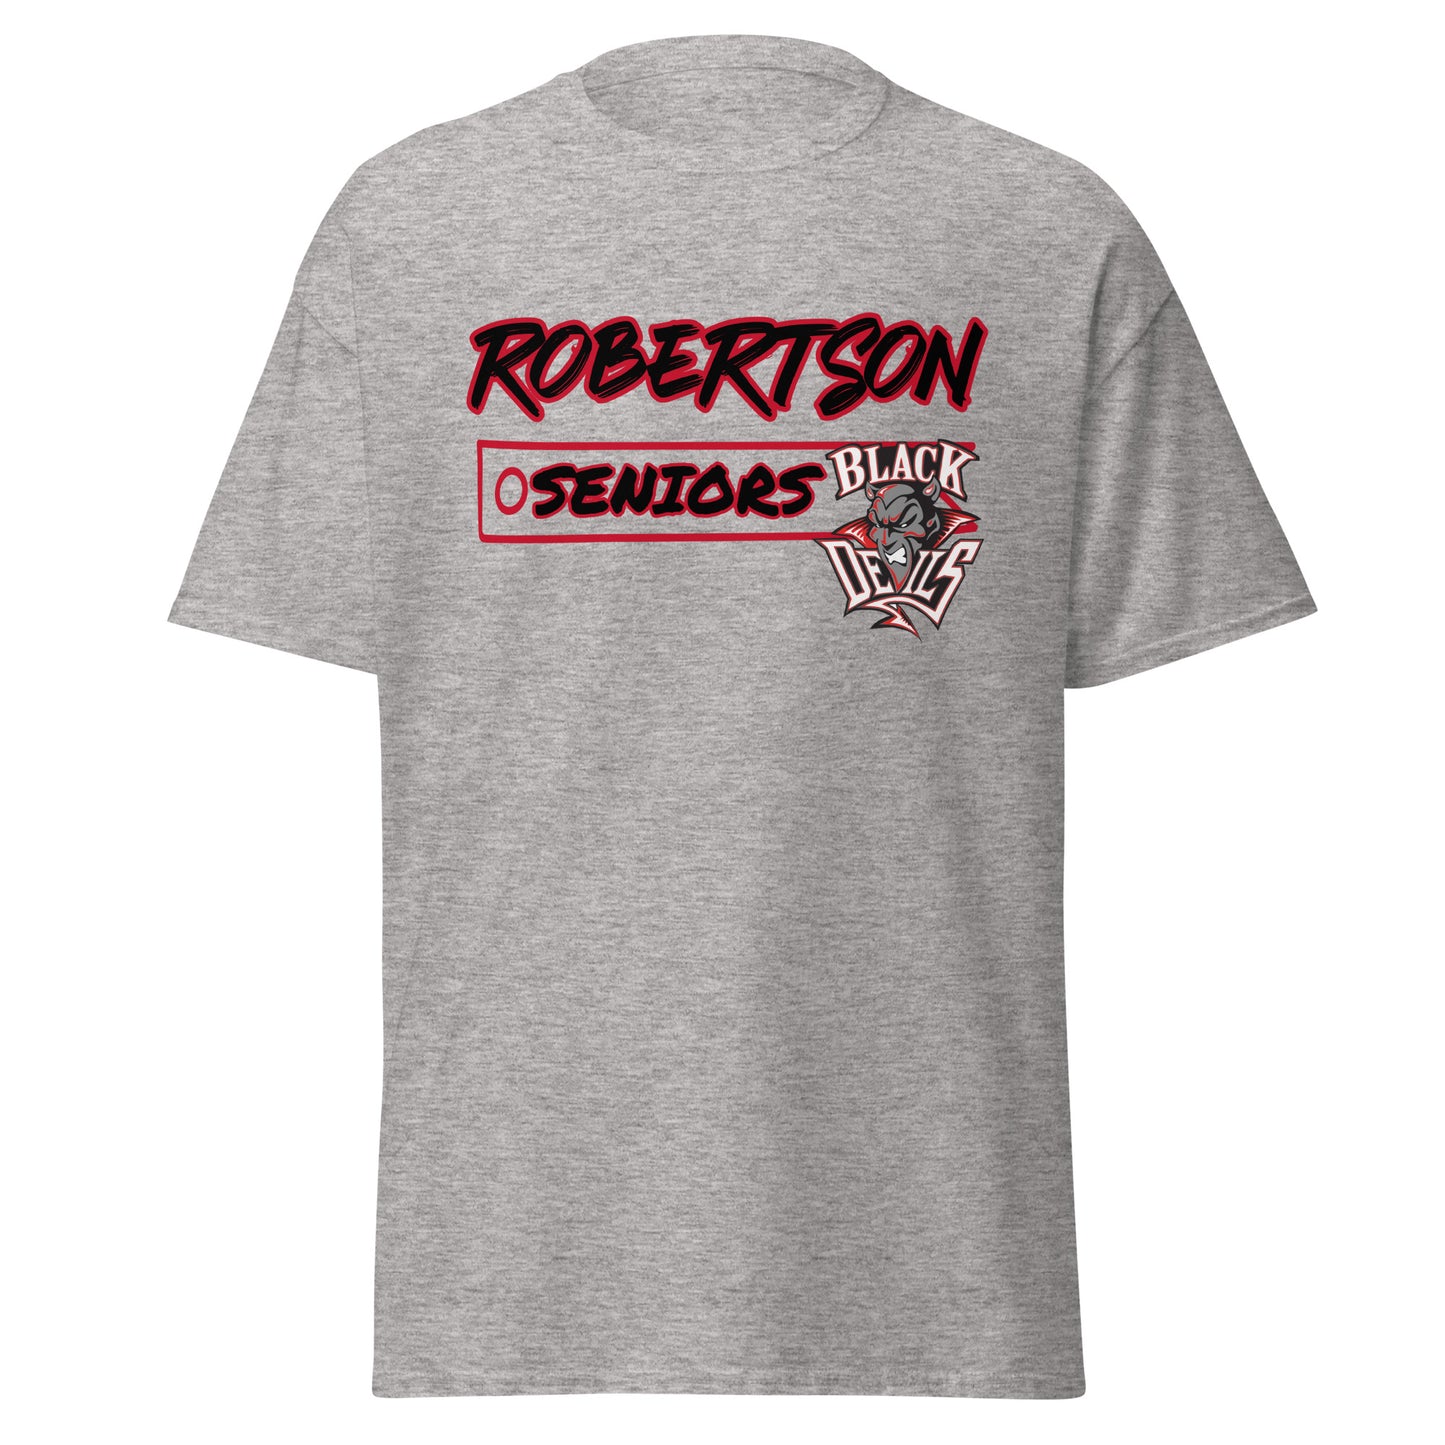 Personalized T-shirt - Classic Logo - Robertson County School